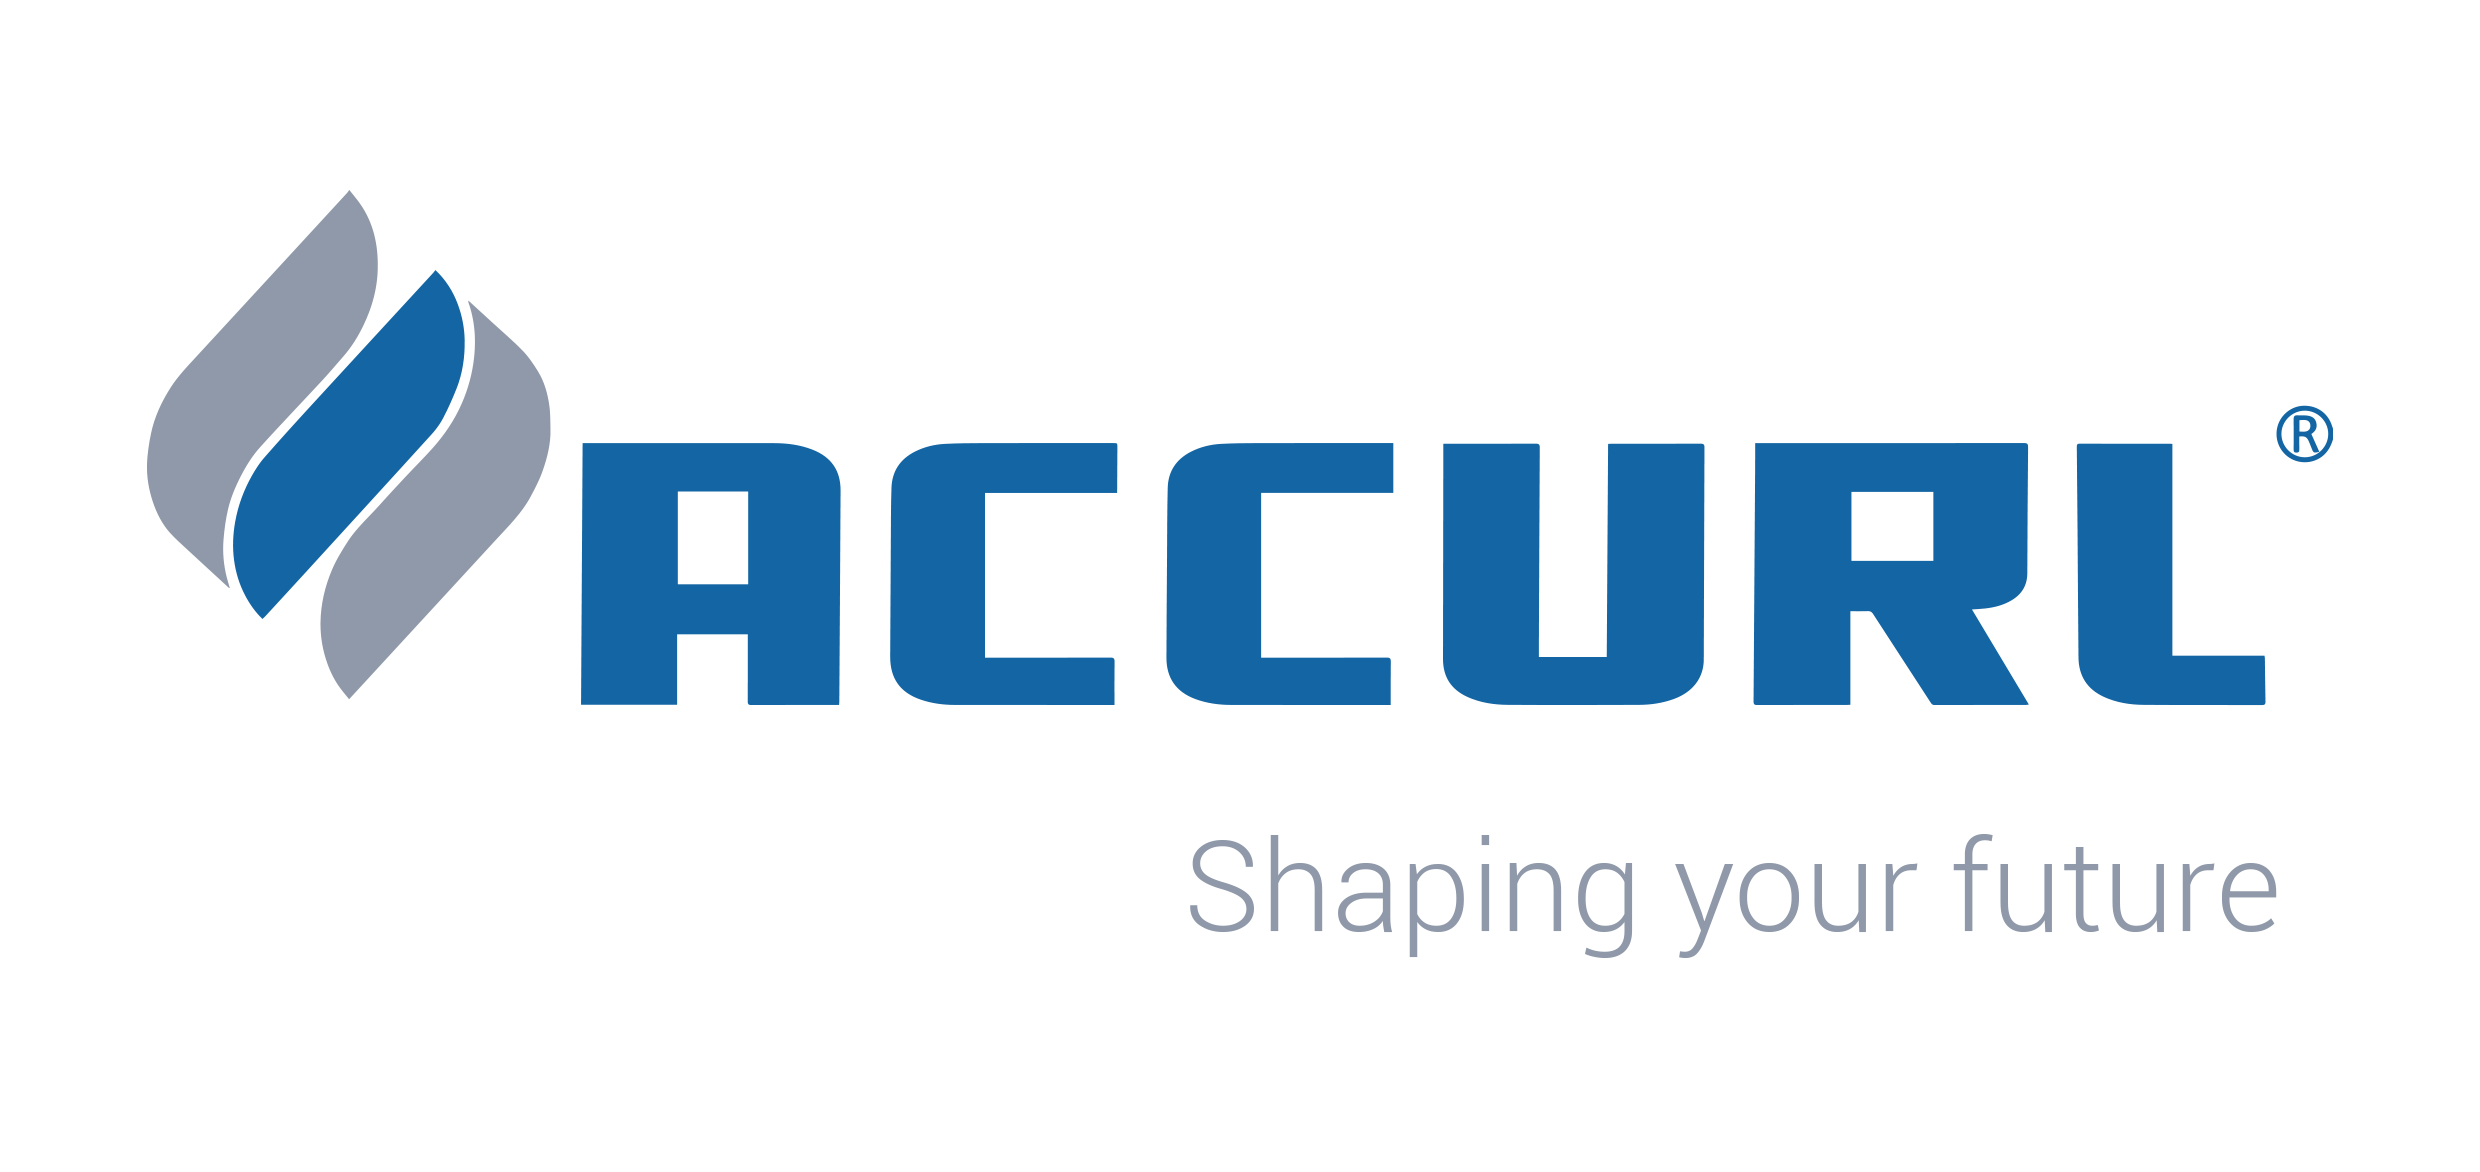 ACCURL logo